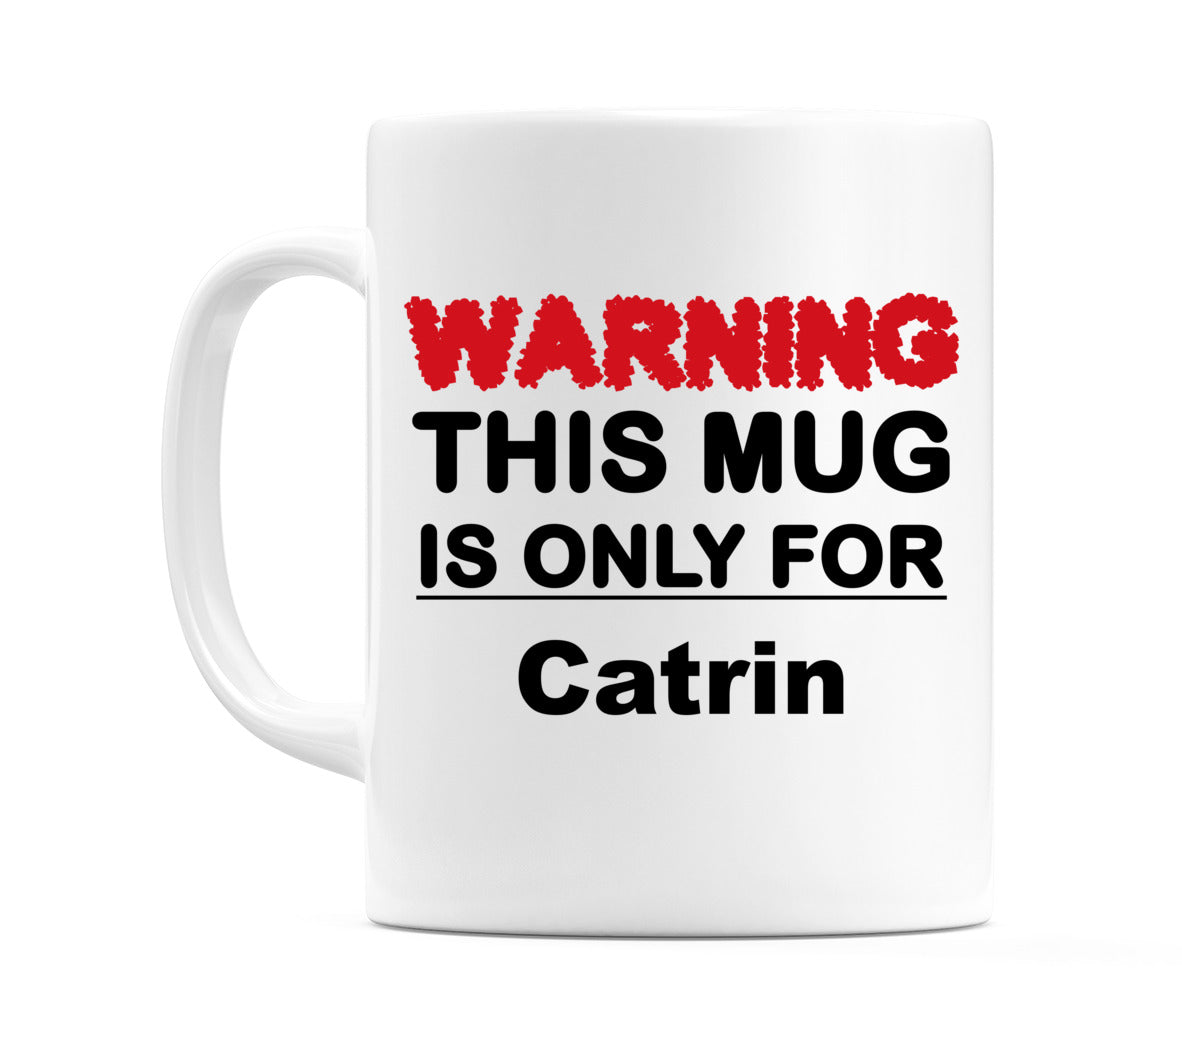 Warning This Mug is ONLY for Catrin Mug